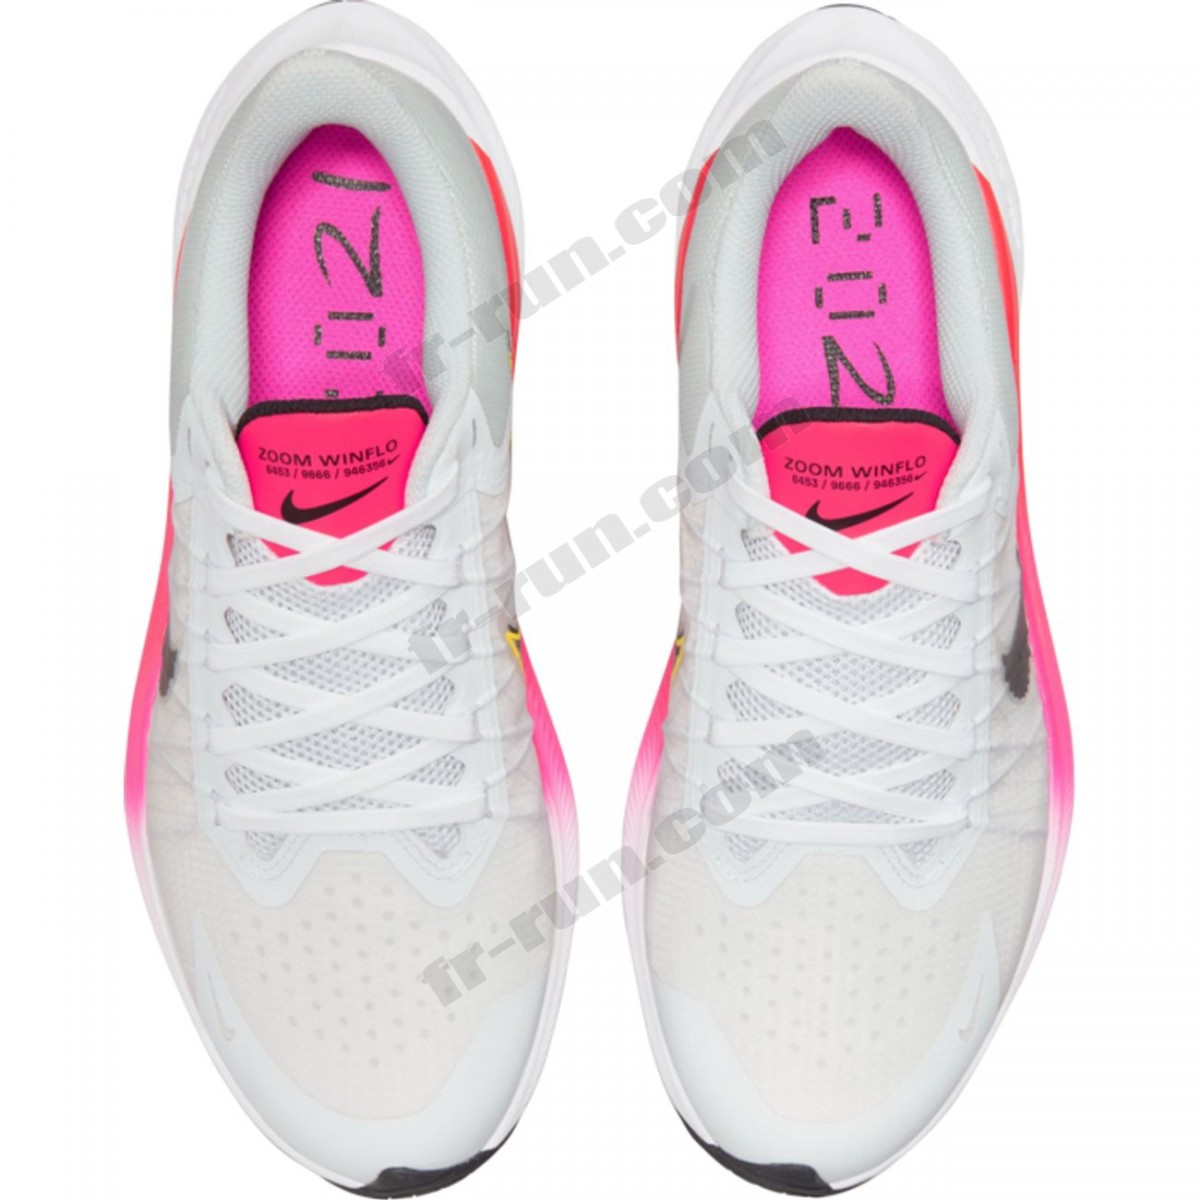 Nike/CHAUSSURES BASSES running femme NIKE NIKE WINFLO 8 ◇◇◇ Pas Cher Du Tout - -3